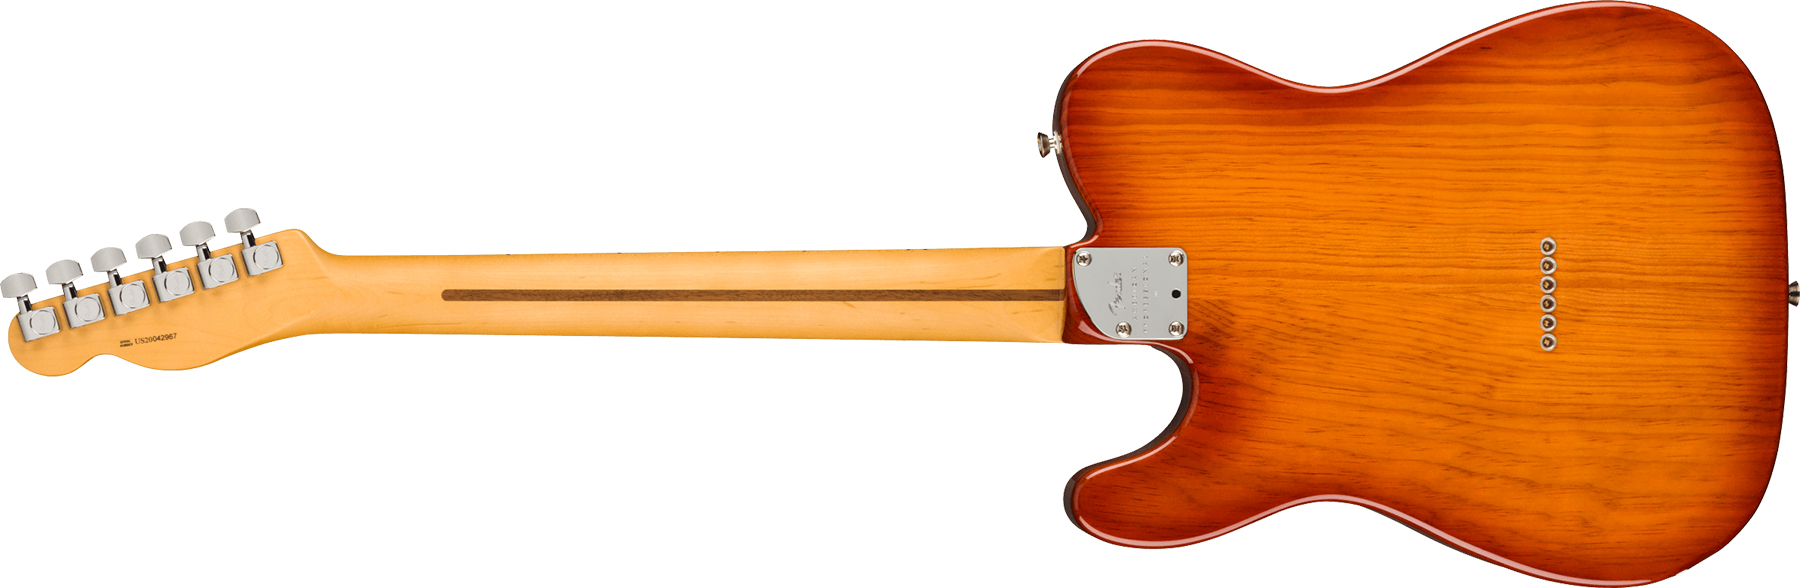 Fender Tele American Professional Ii Usa Mn - Sienna Sunburst - Tel shape electric guitar - Variation 1